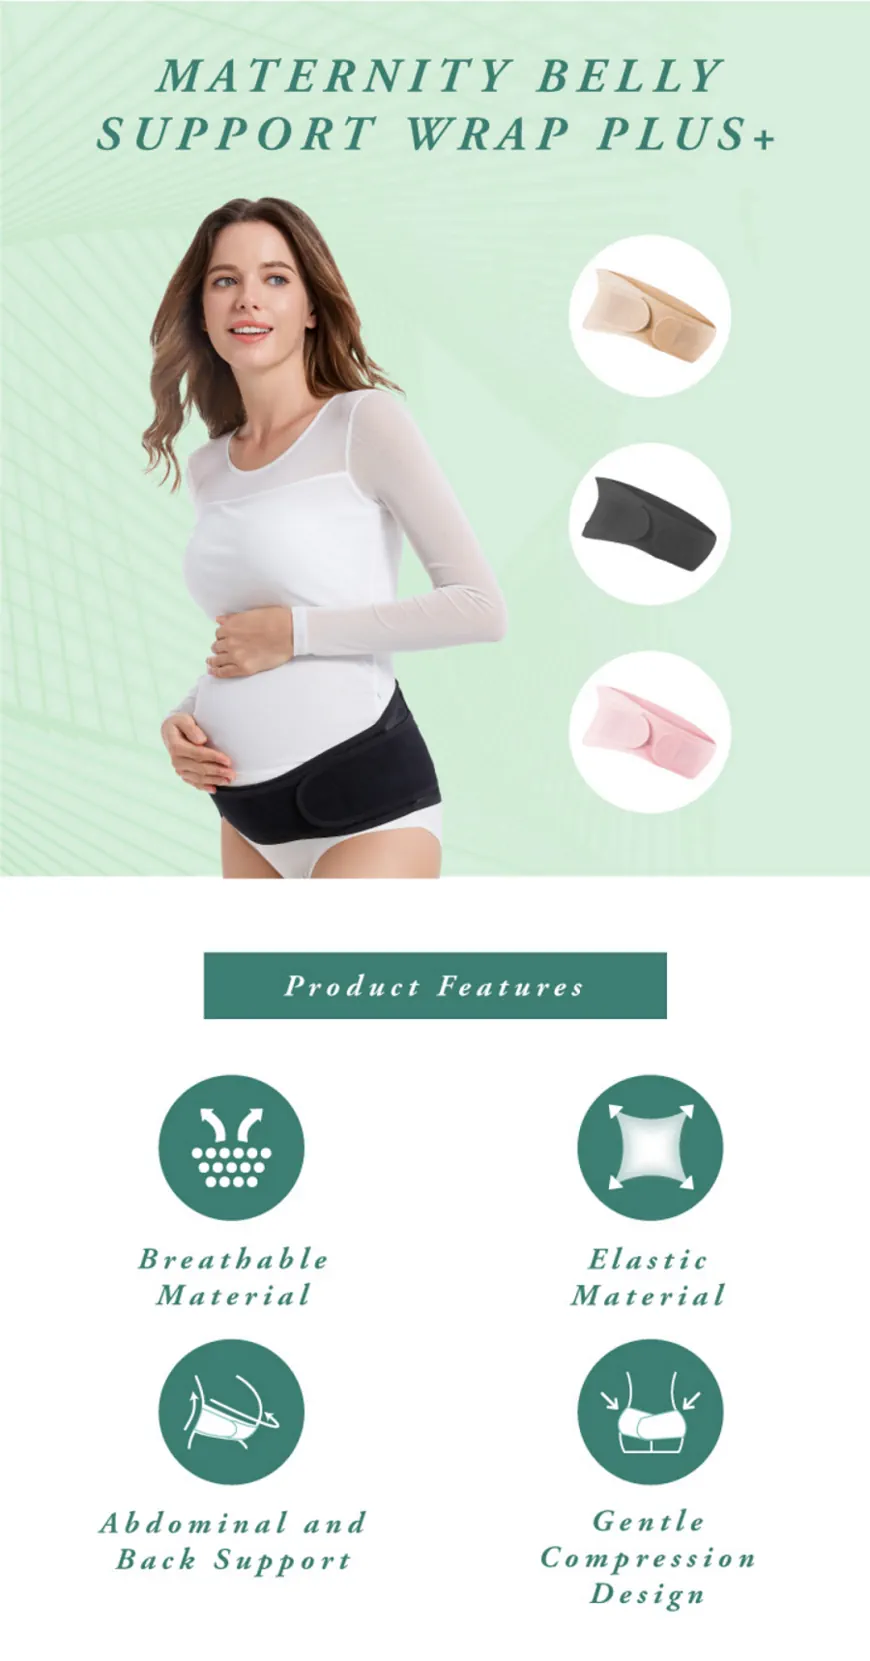 Shapee Maternity Belly Support Wrap Plus Descriptions